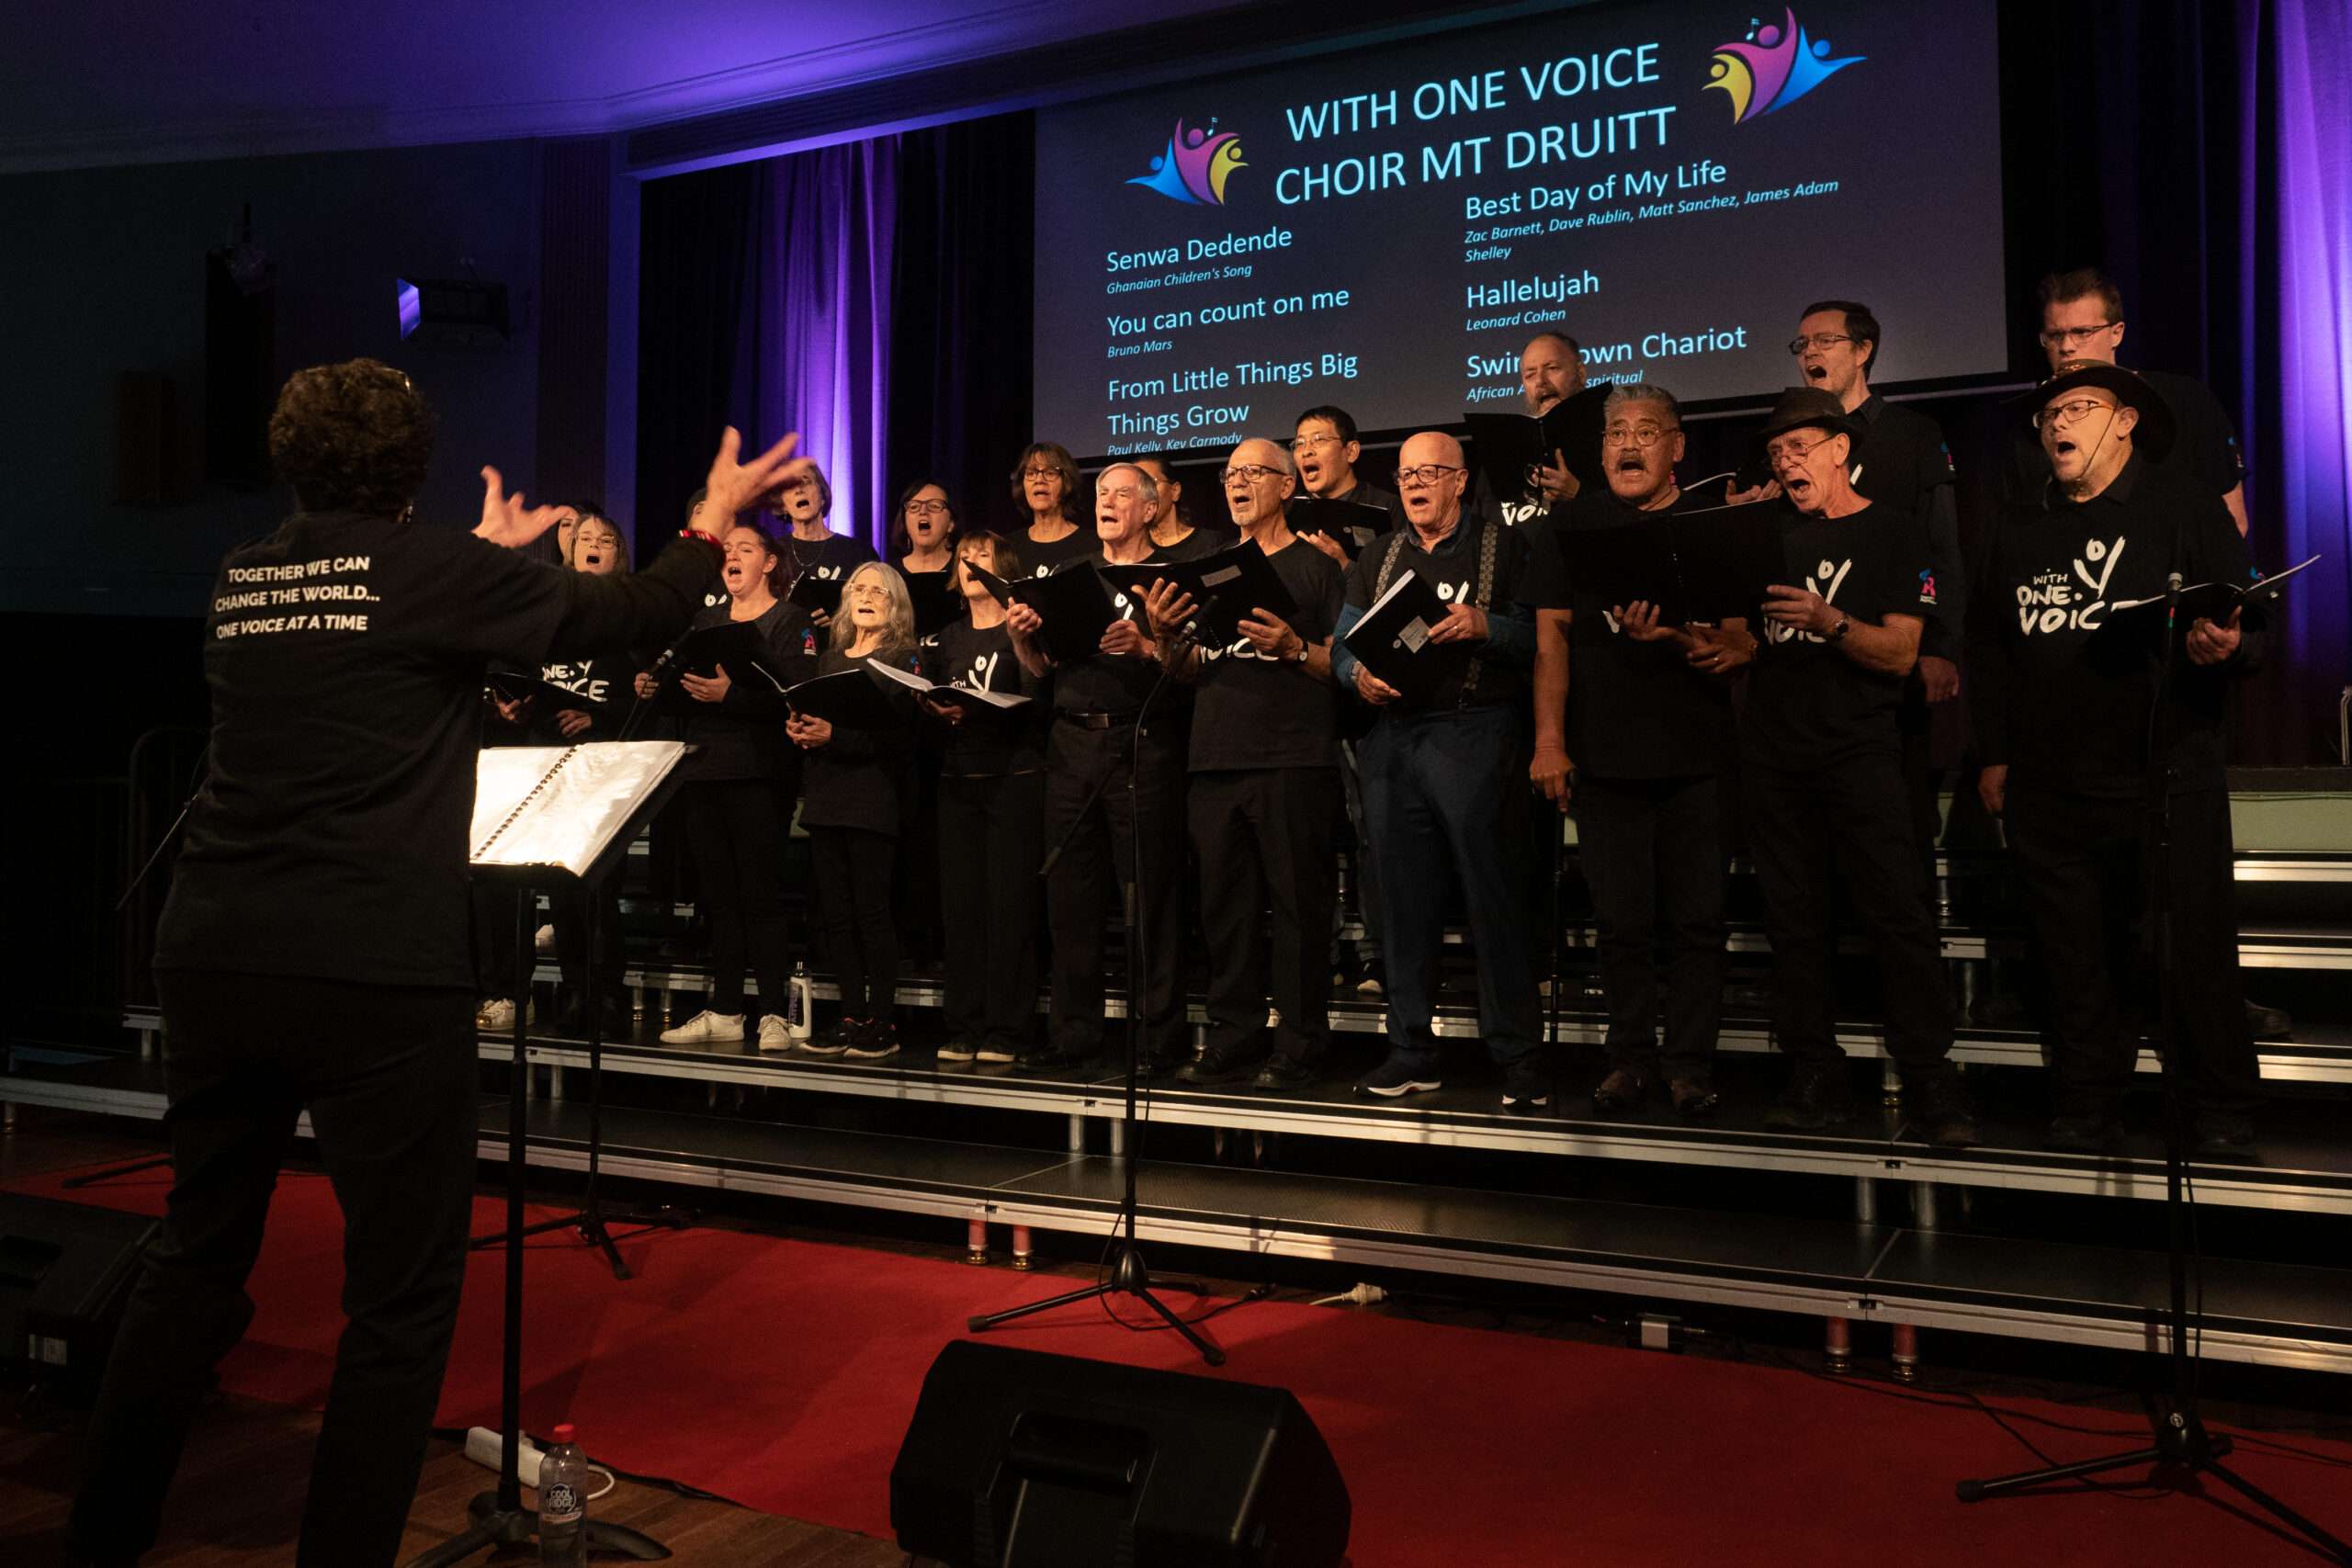 With One Voice community choir Mt Druitt performance